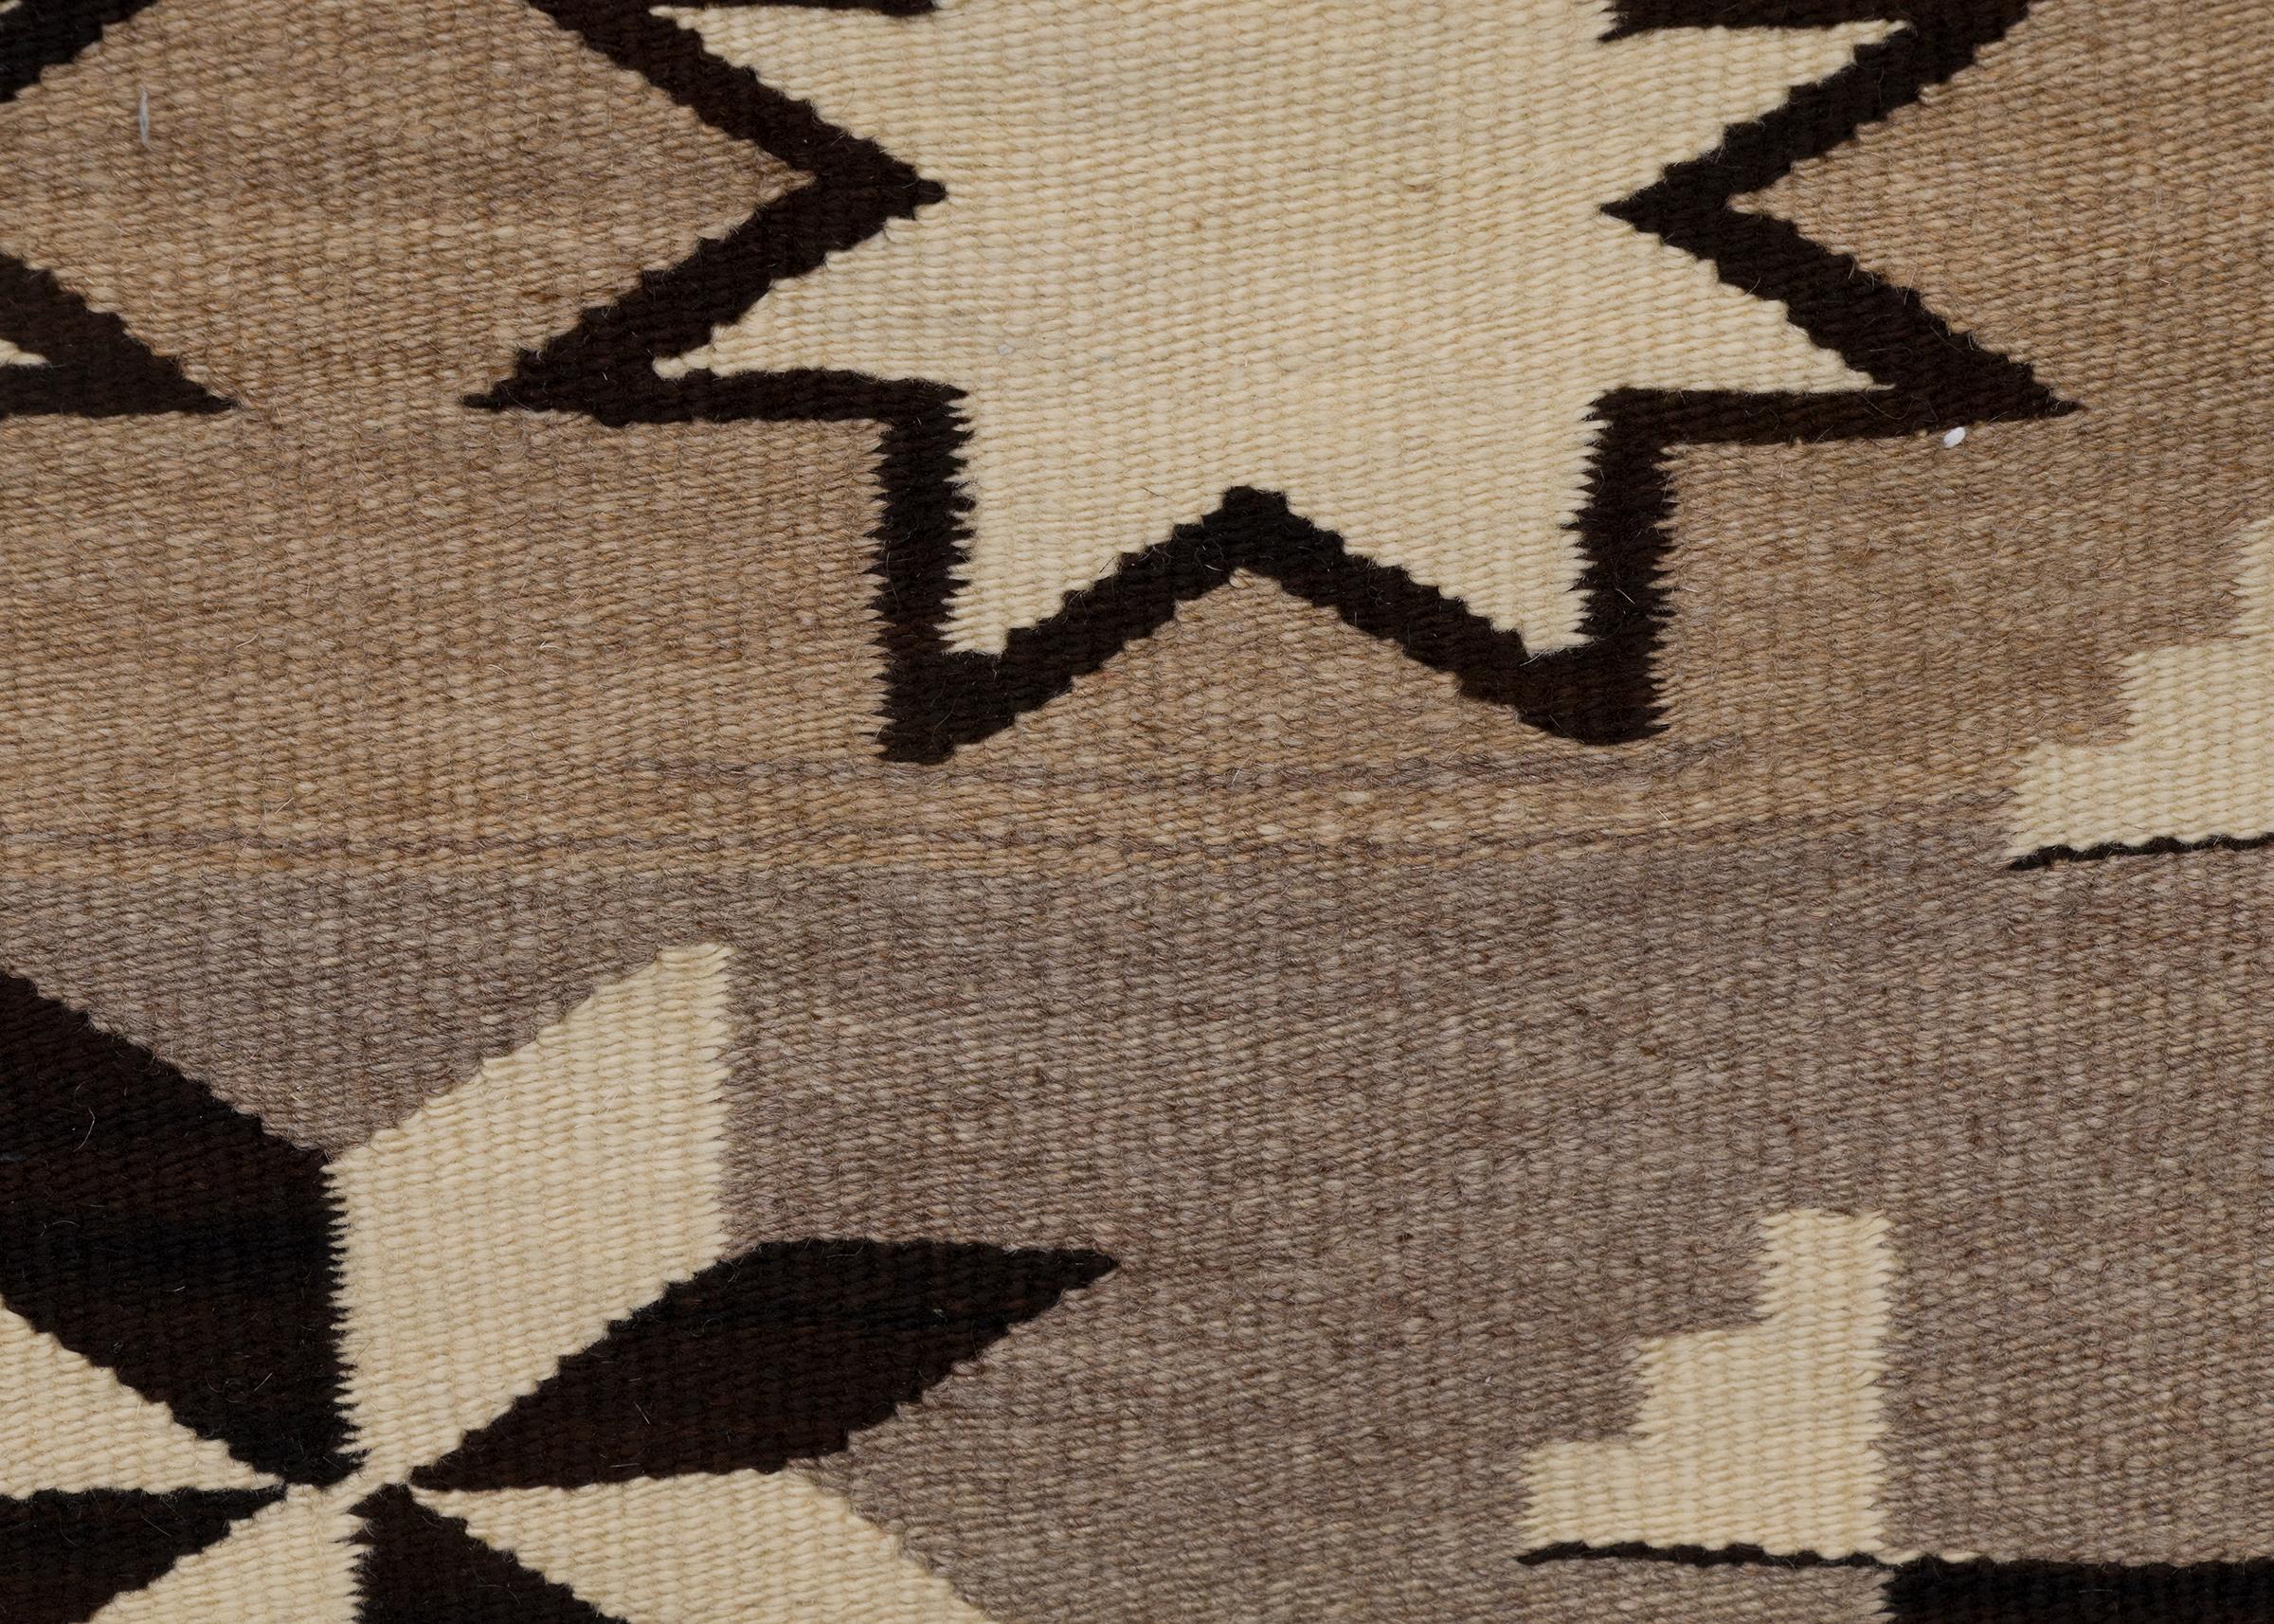 American Navajo Rug, Vintage circa 1935 Trading Post Era Southwestern Weaving